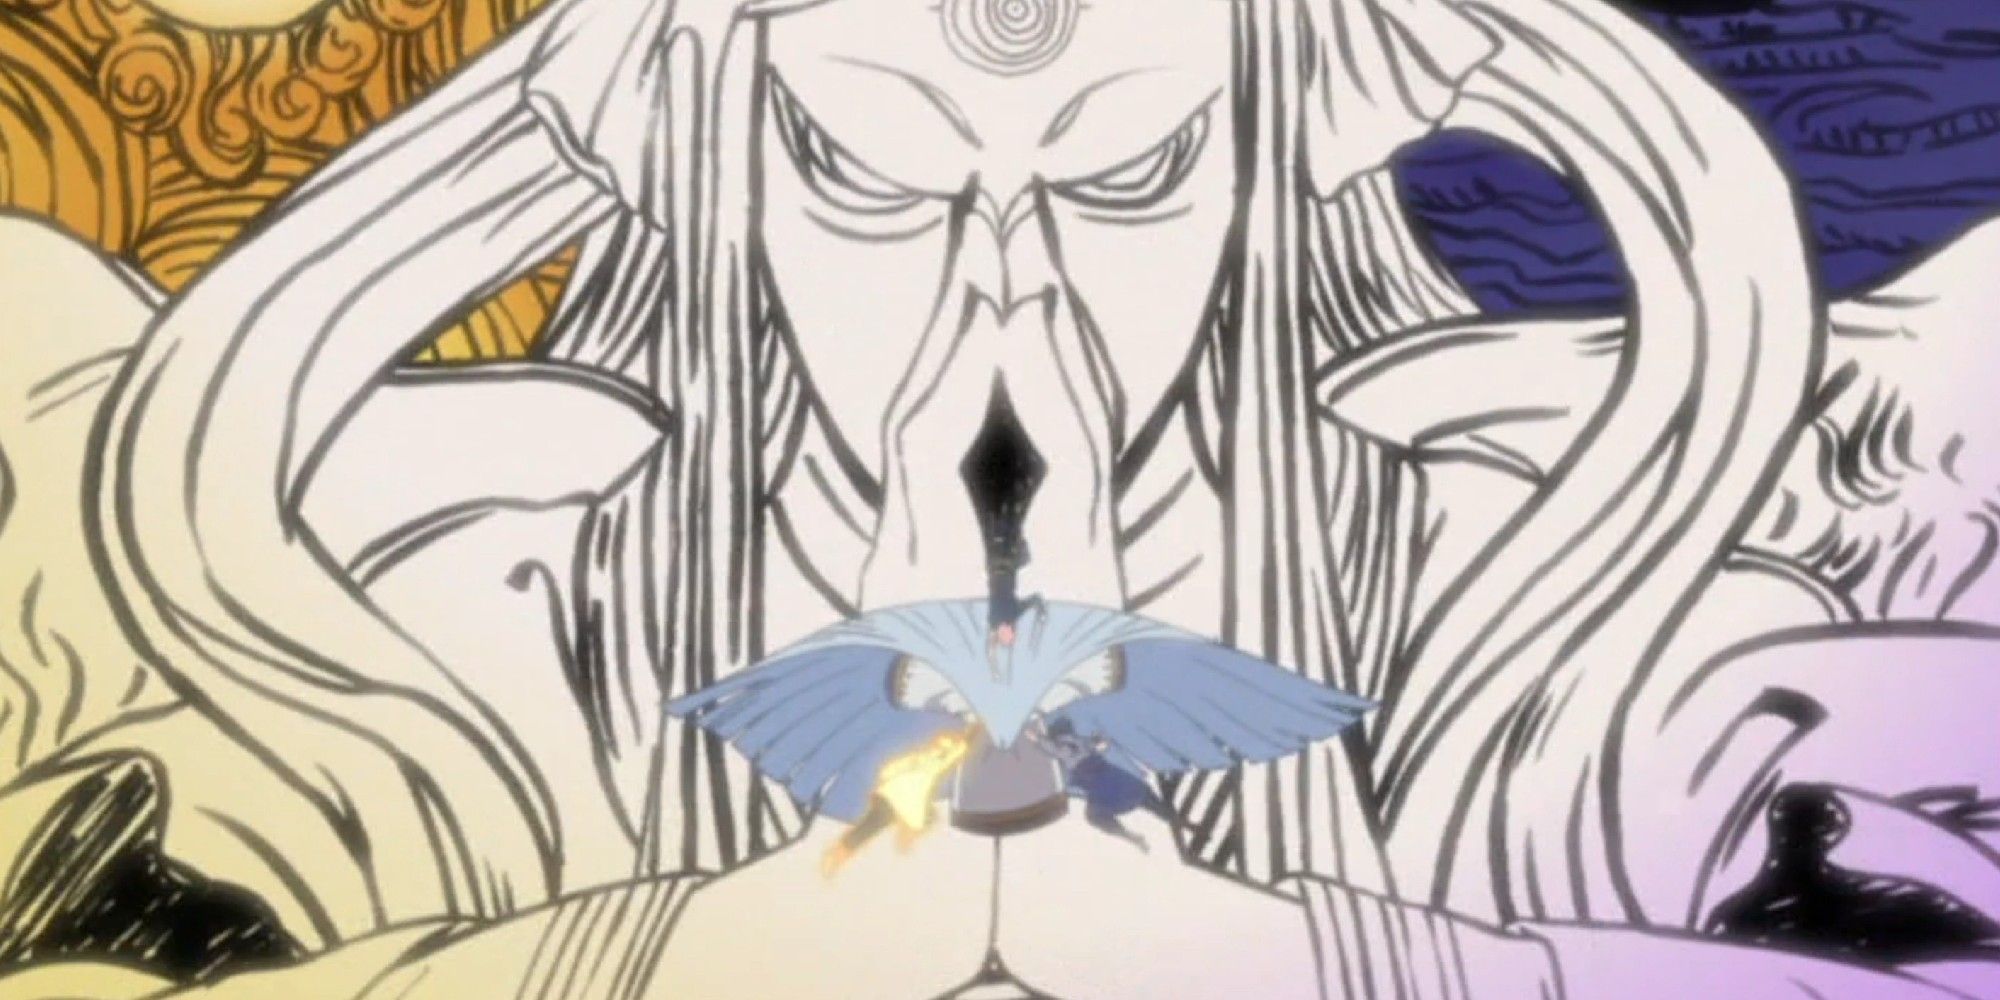 Naruto and Sasuke sealing Kaguya in the anime adaptation of Naruto Shippuden.